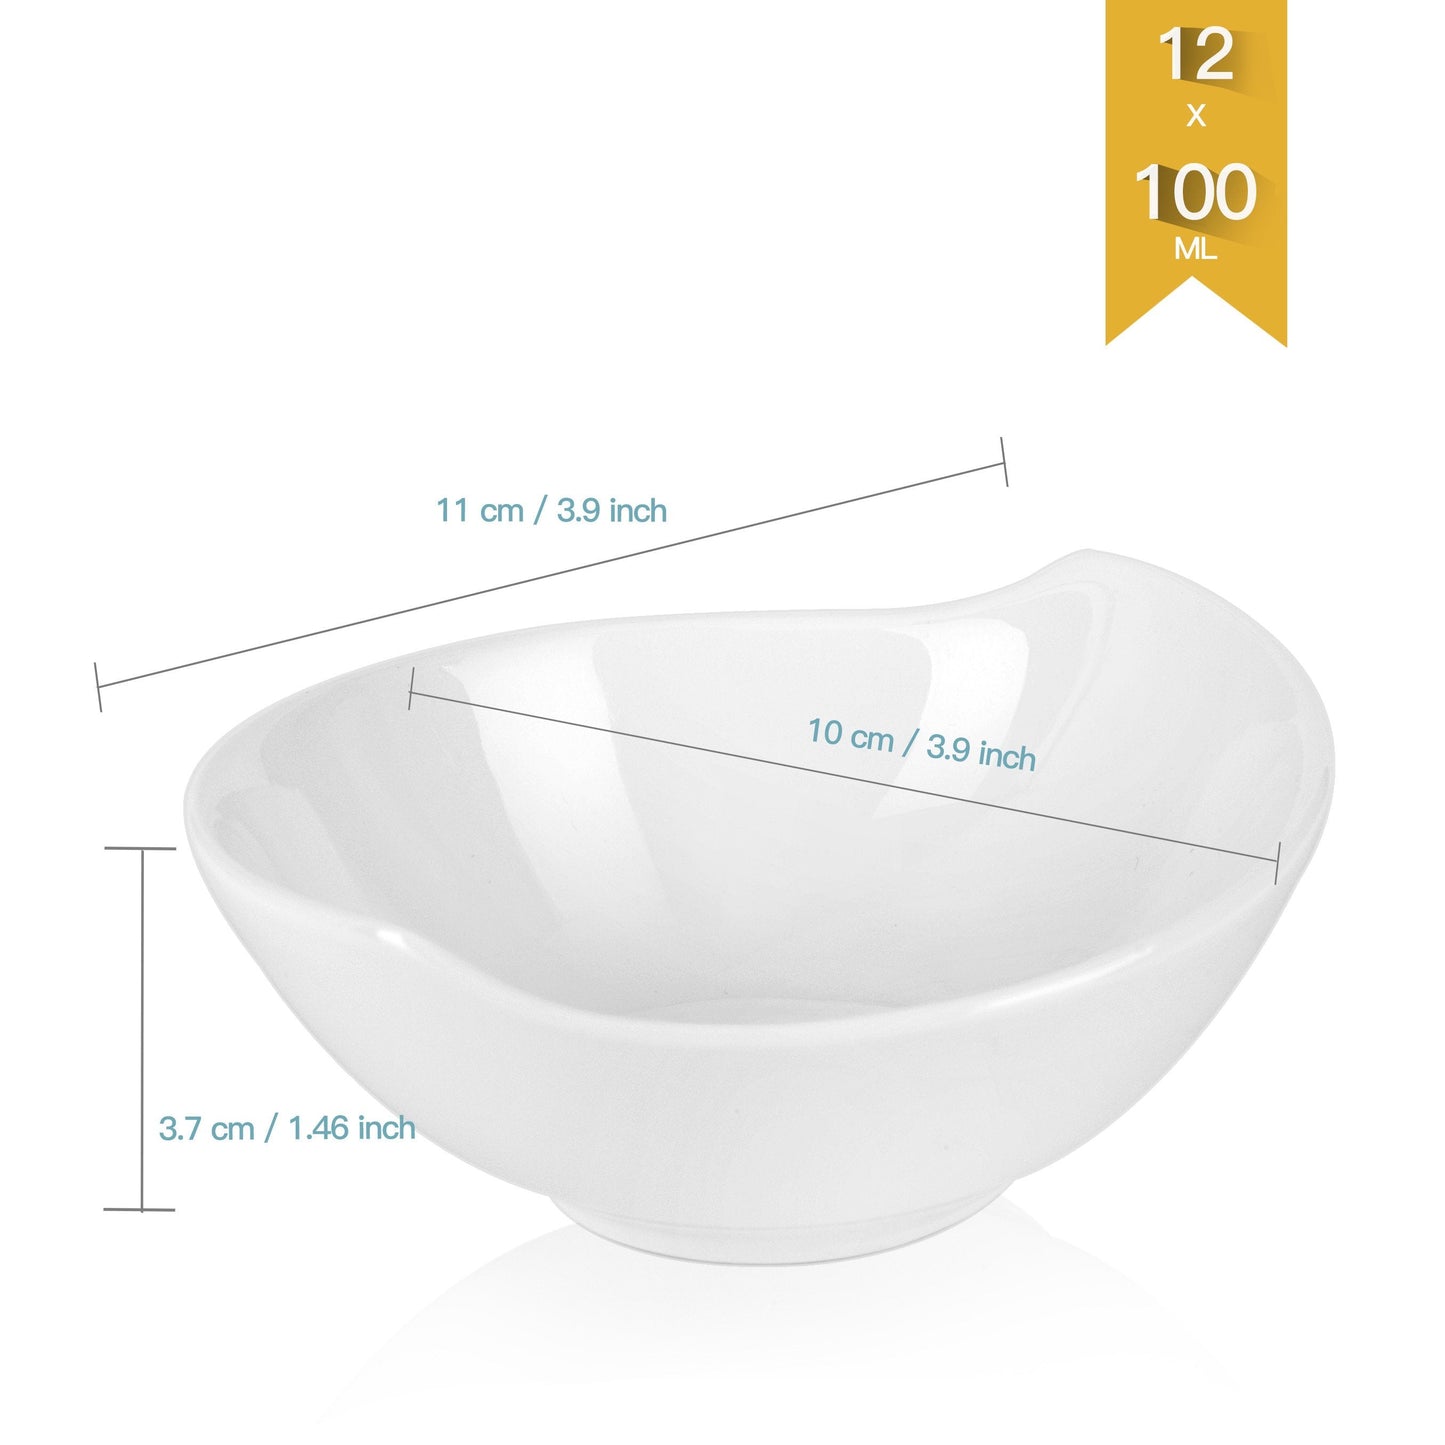 Ramekin Set of 6 Porcelain Souffle Cup, Baking Dipping Bowls (White 4.3" ) - Nordic Side - 43, Baking, Bowl, Brulee, Creme, Cup, Dessert, Dipping, Dishes, Fruit, MALACASA, of, Plates, Porcela